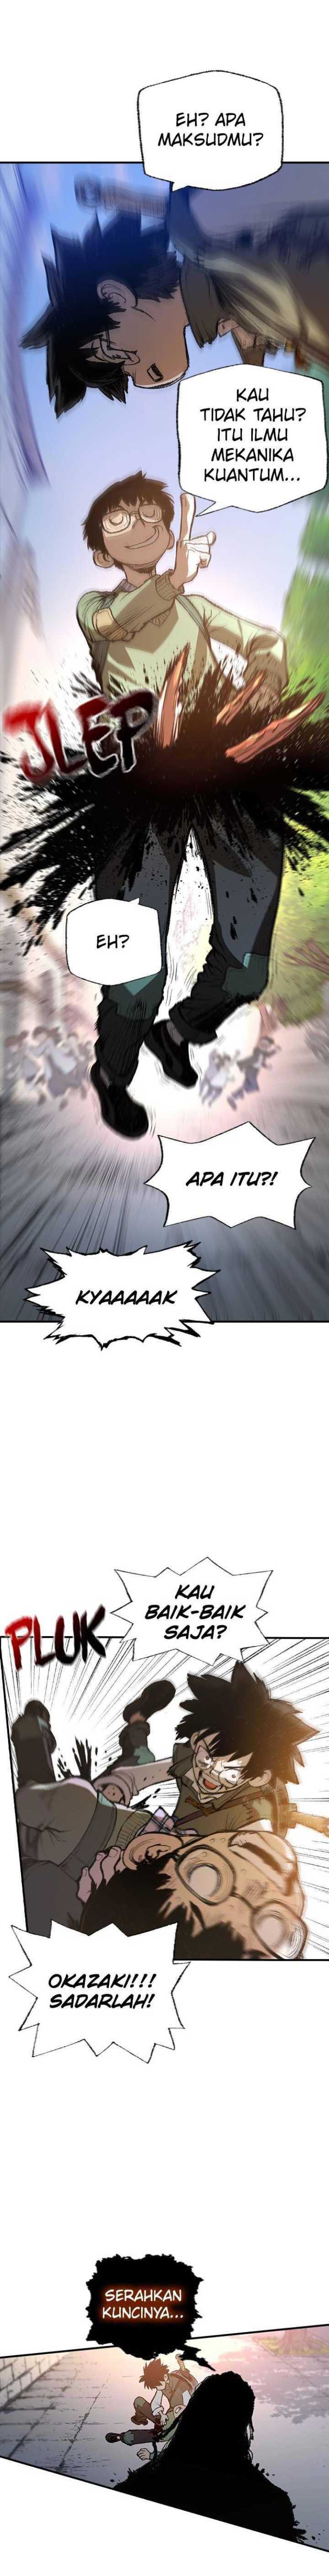 Super String: Isekai Kenbunroku (webtoon) Chapter 6